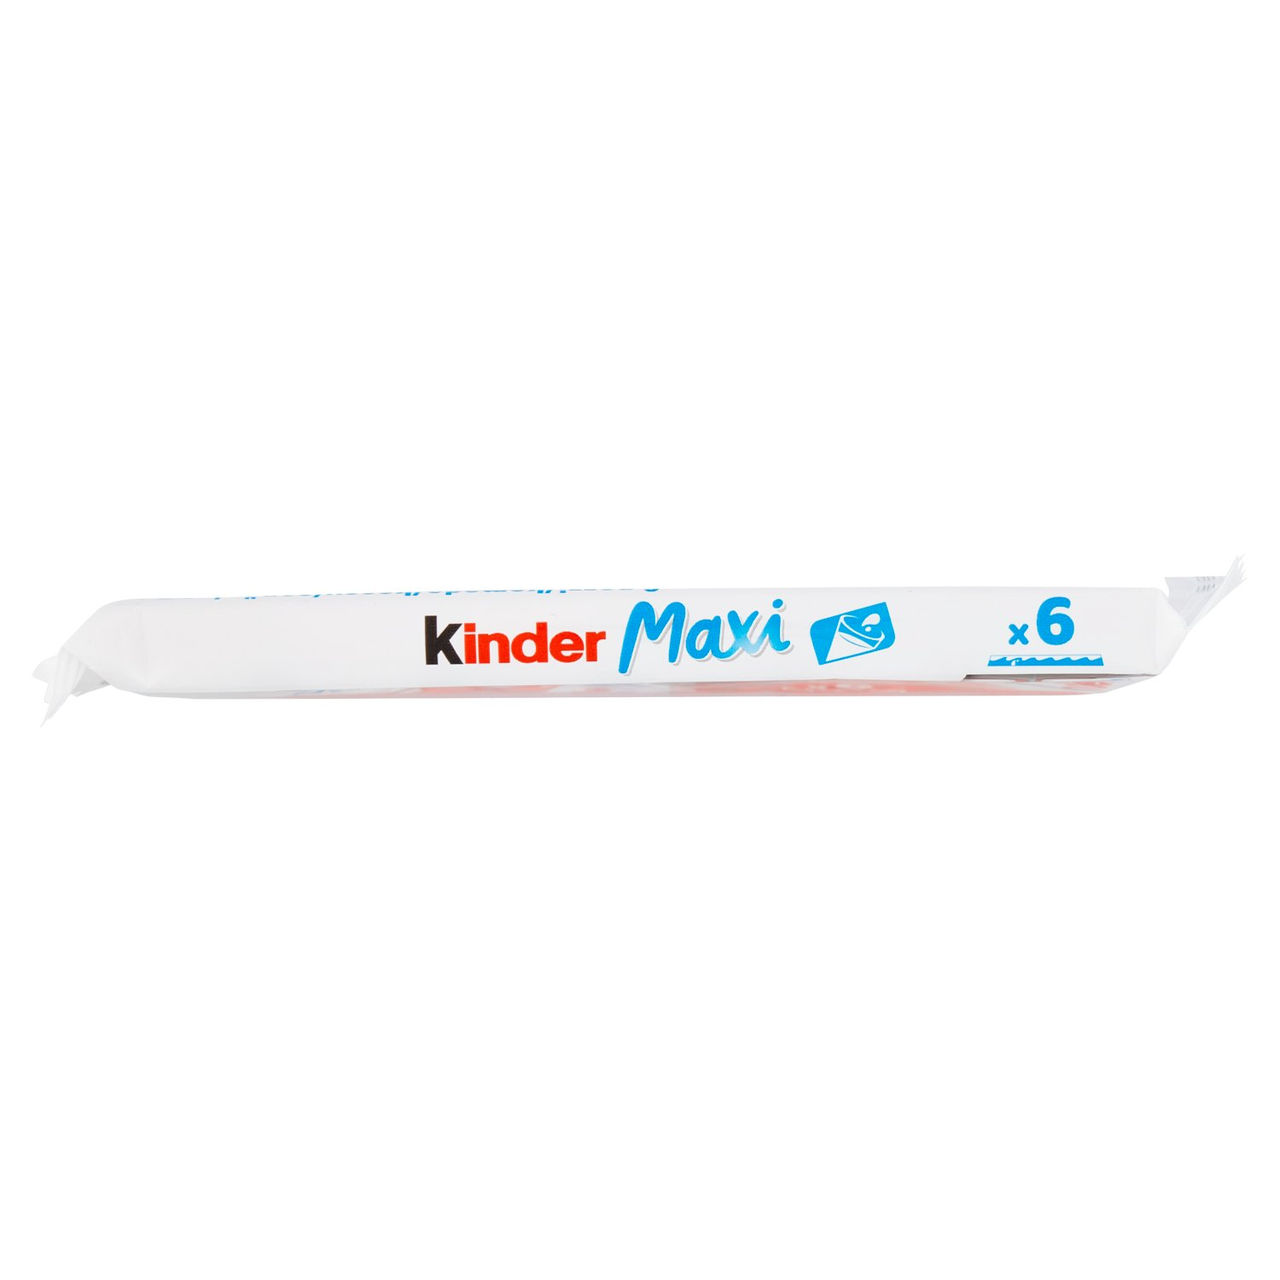 Kinder Maxi 6 x 21 g in vendita online